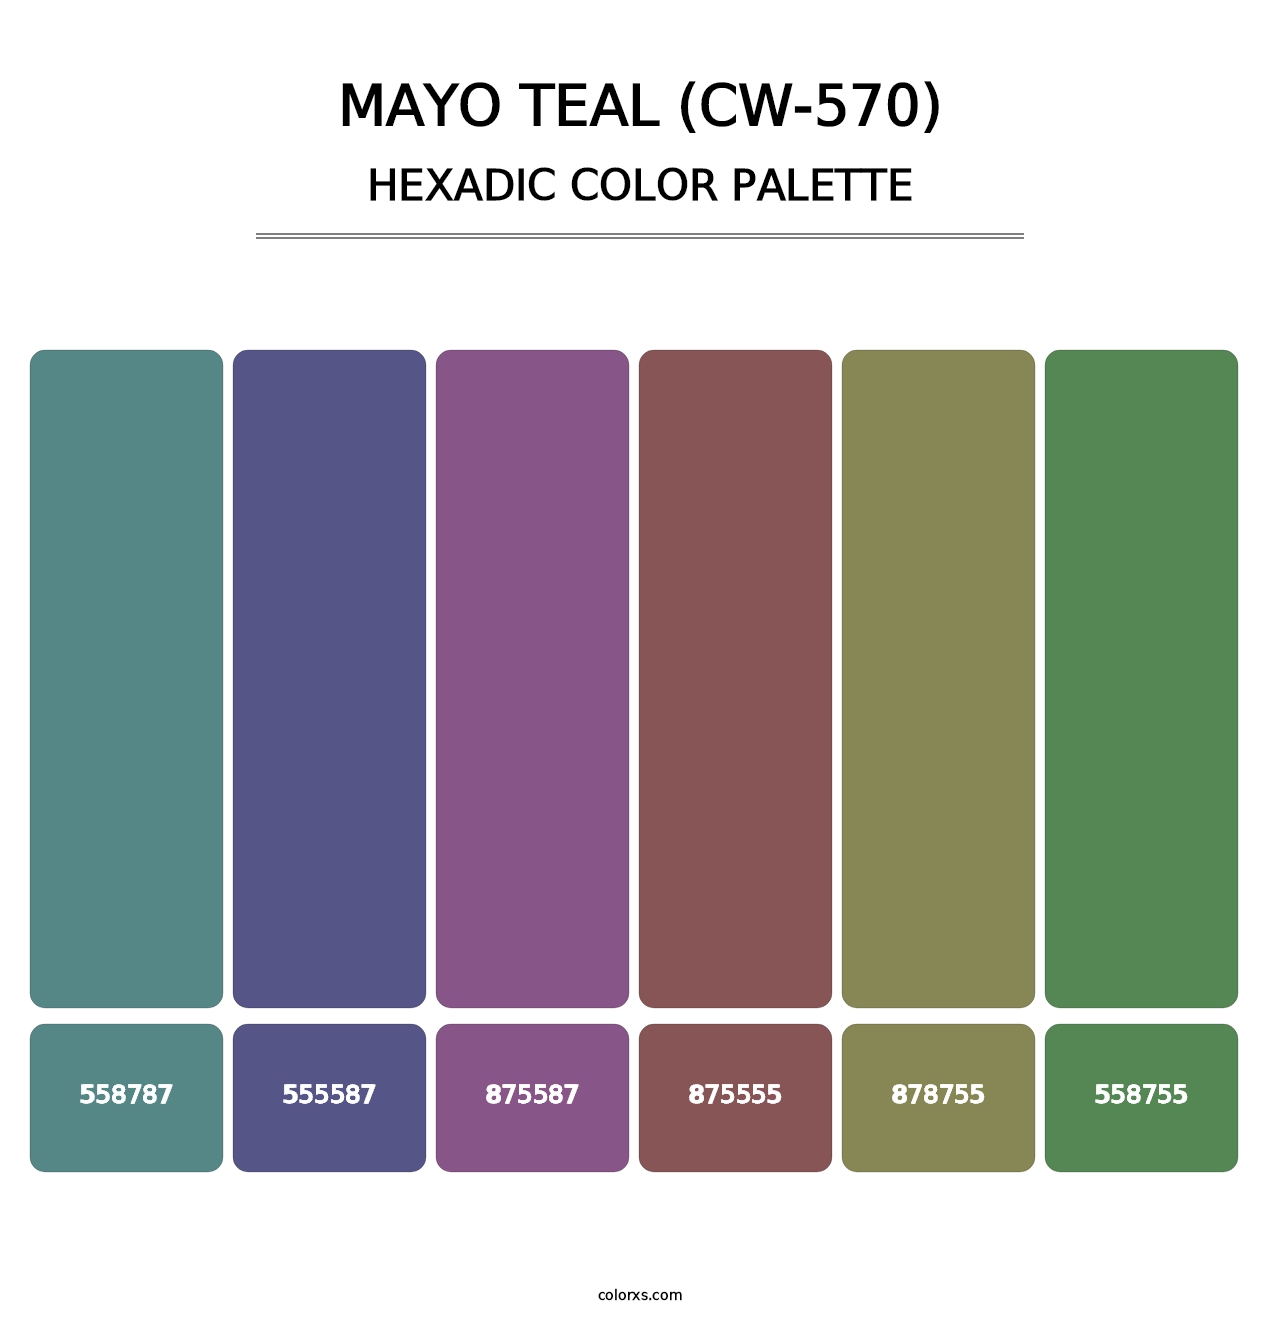 Mayo Teal (CW-570) - Hexadic Color Palette